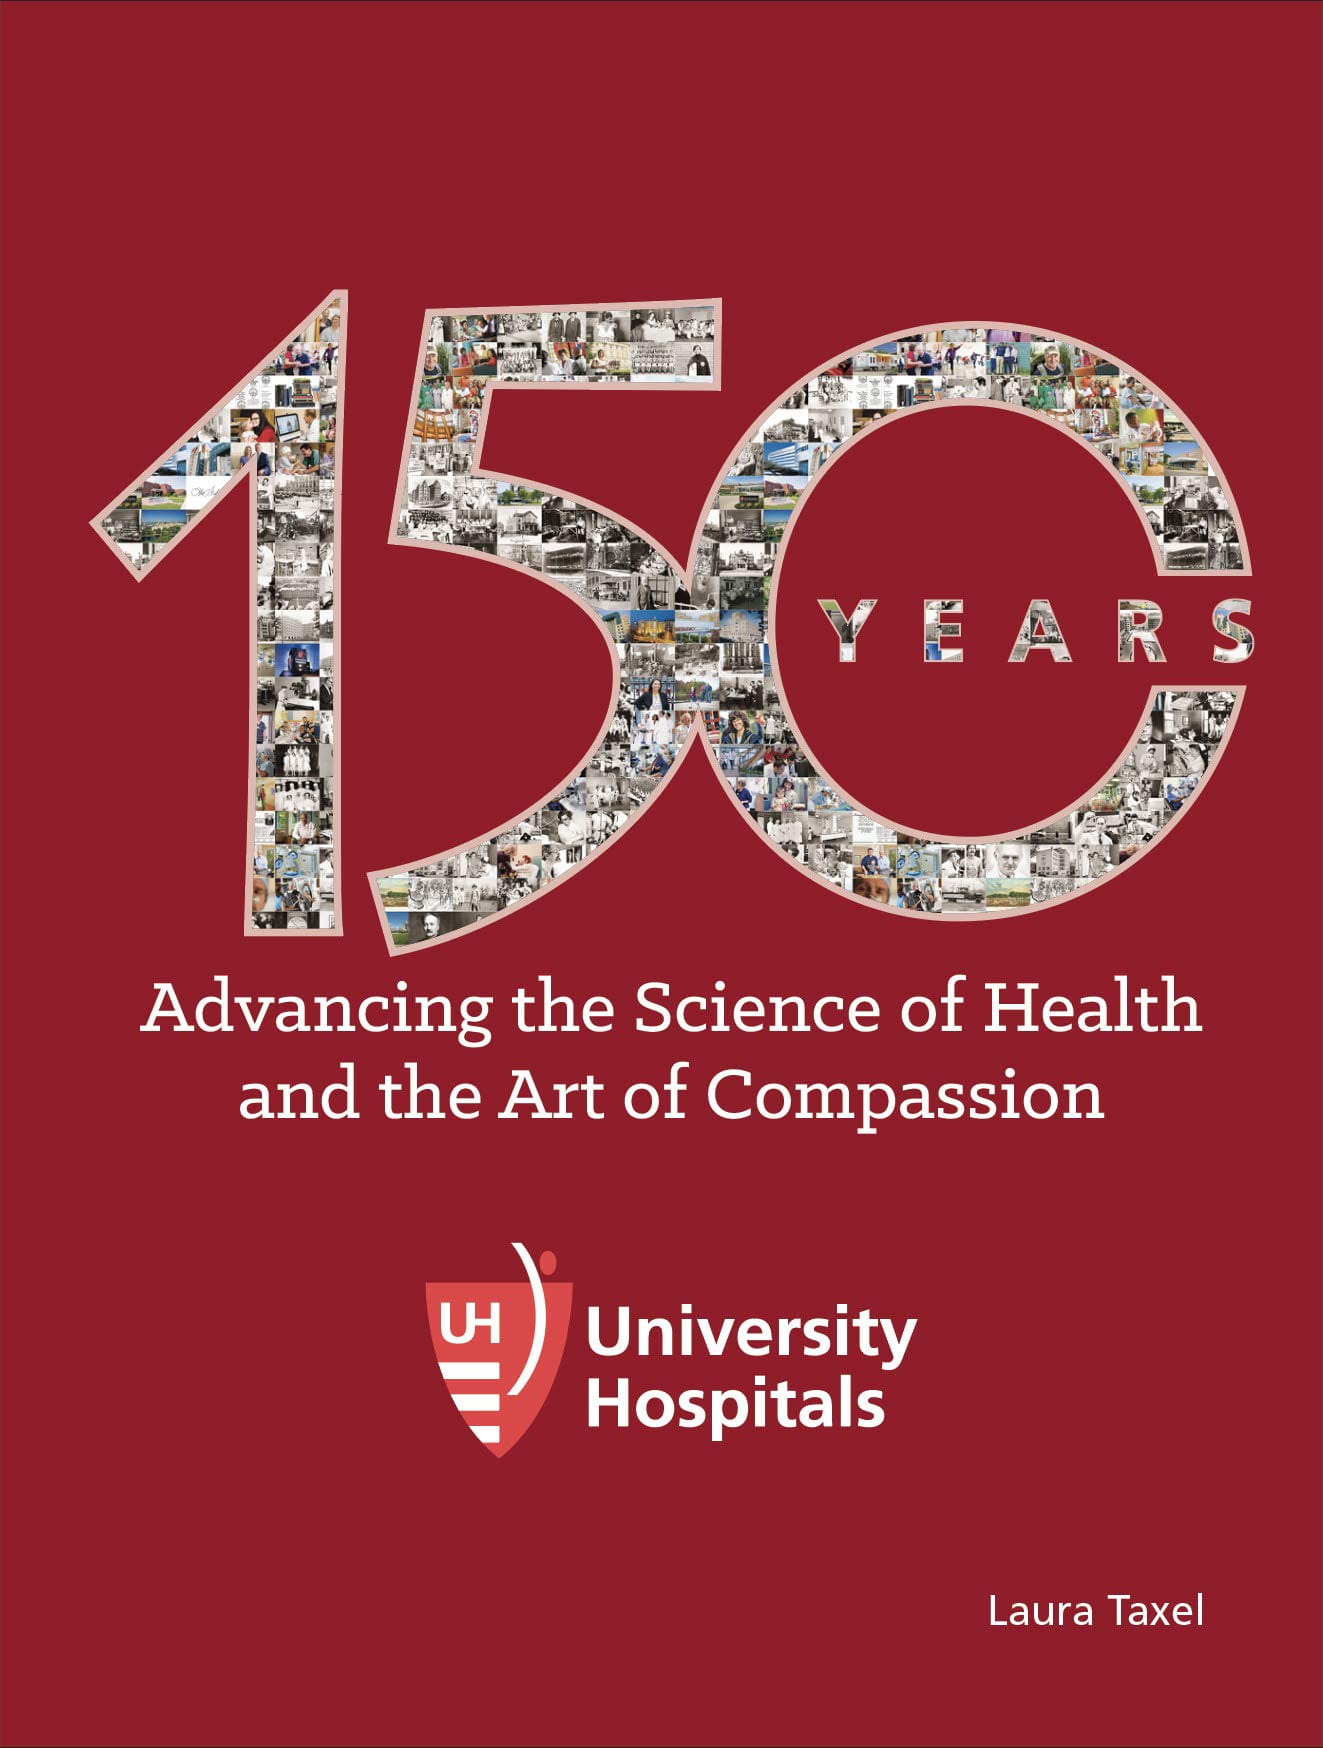 University Hospitals 150 Year Anniversary Book